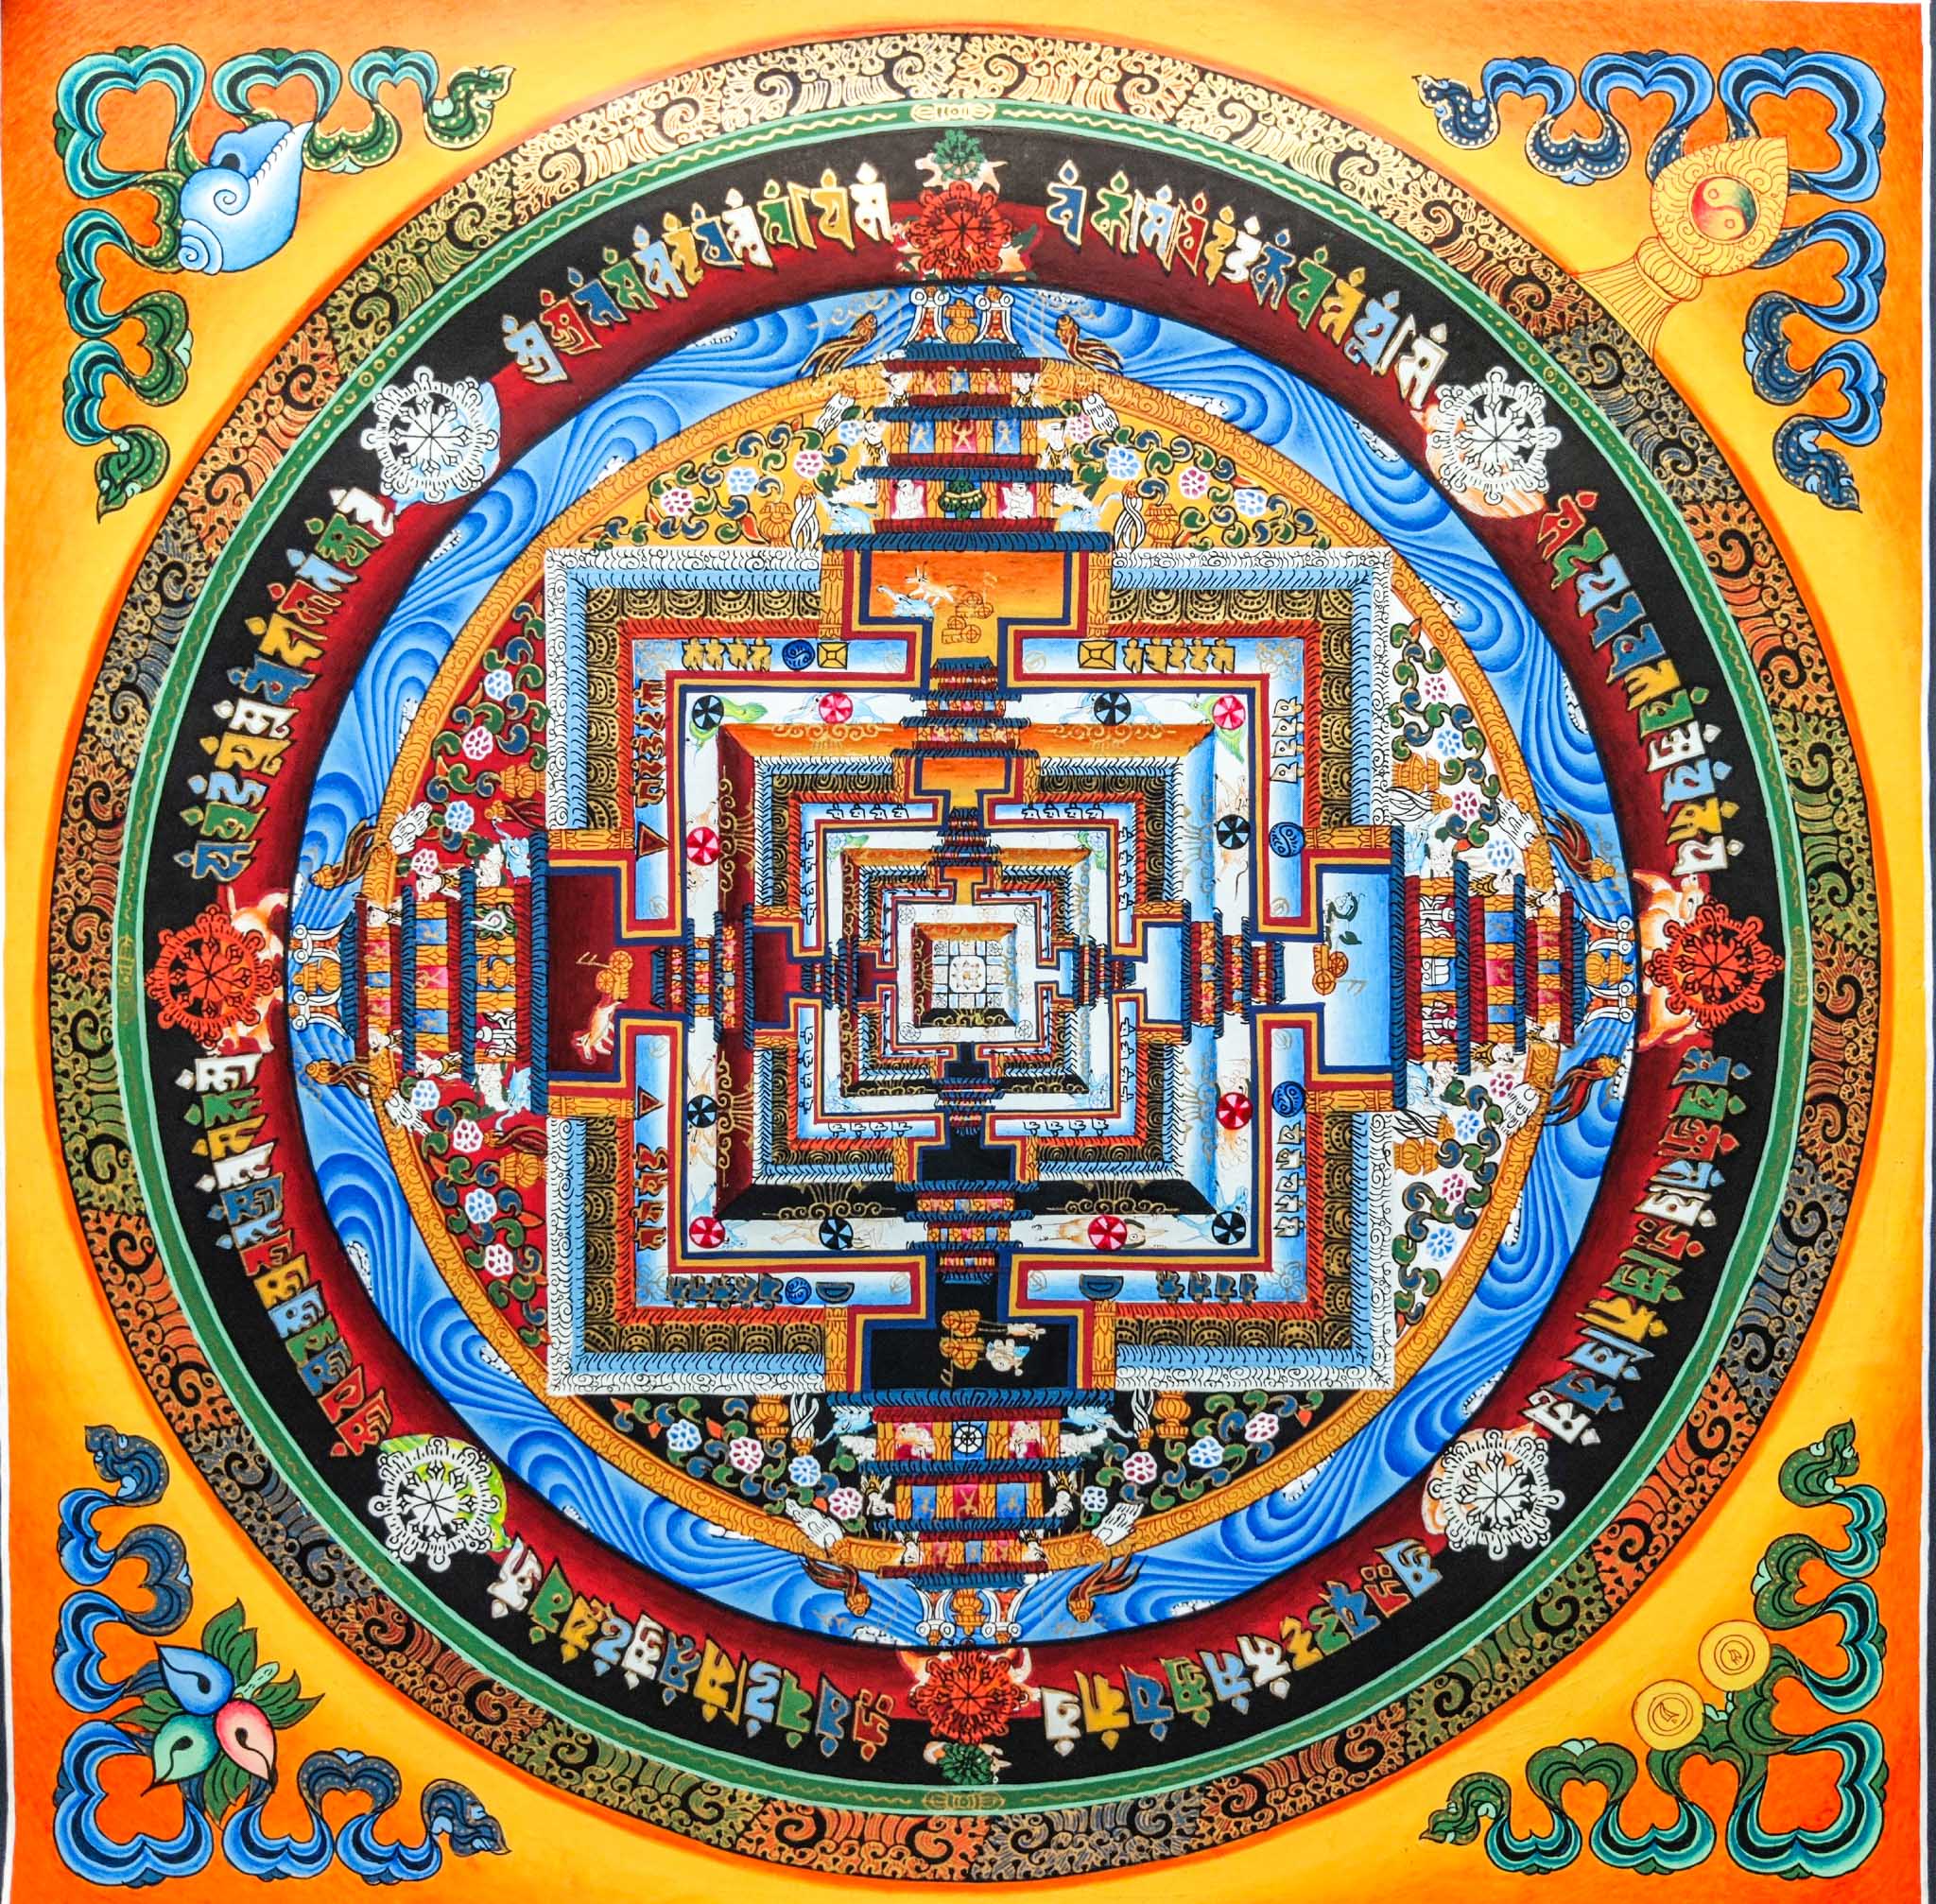 Kalachakra Mandala Thangka painting